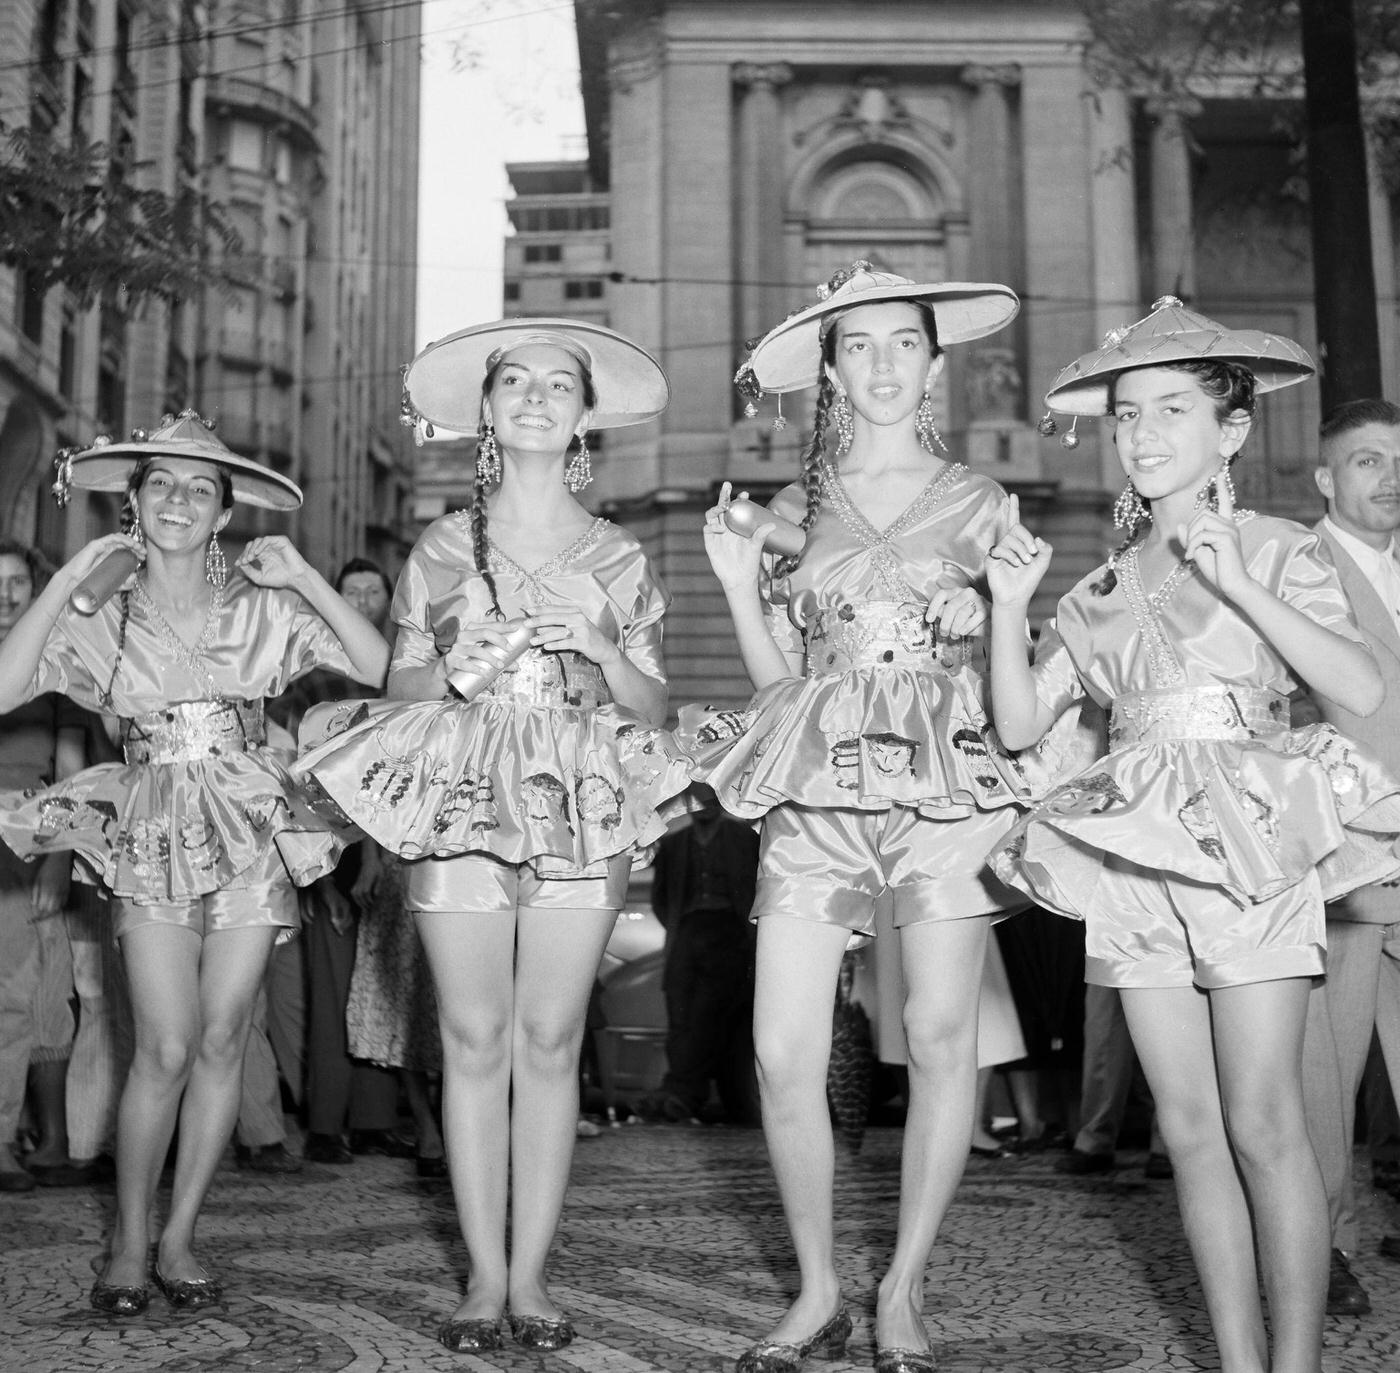 Costumed Posers, Rio Carnival 1953